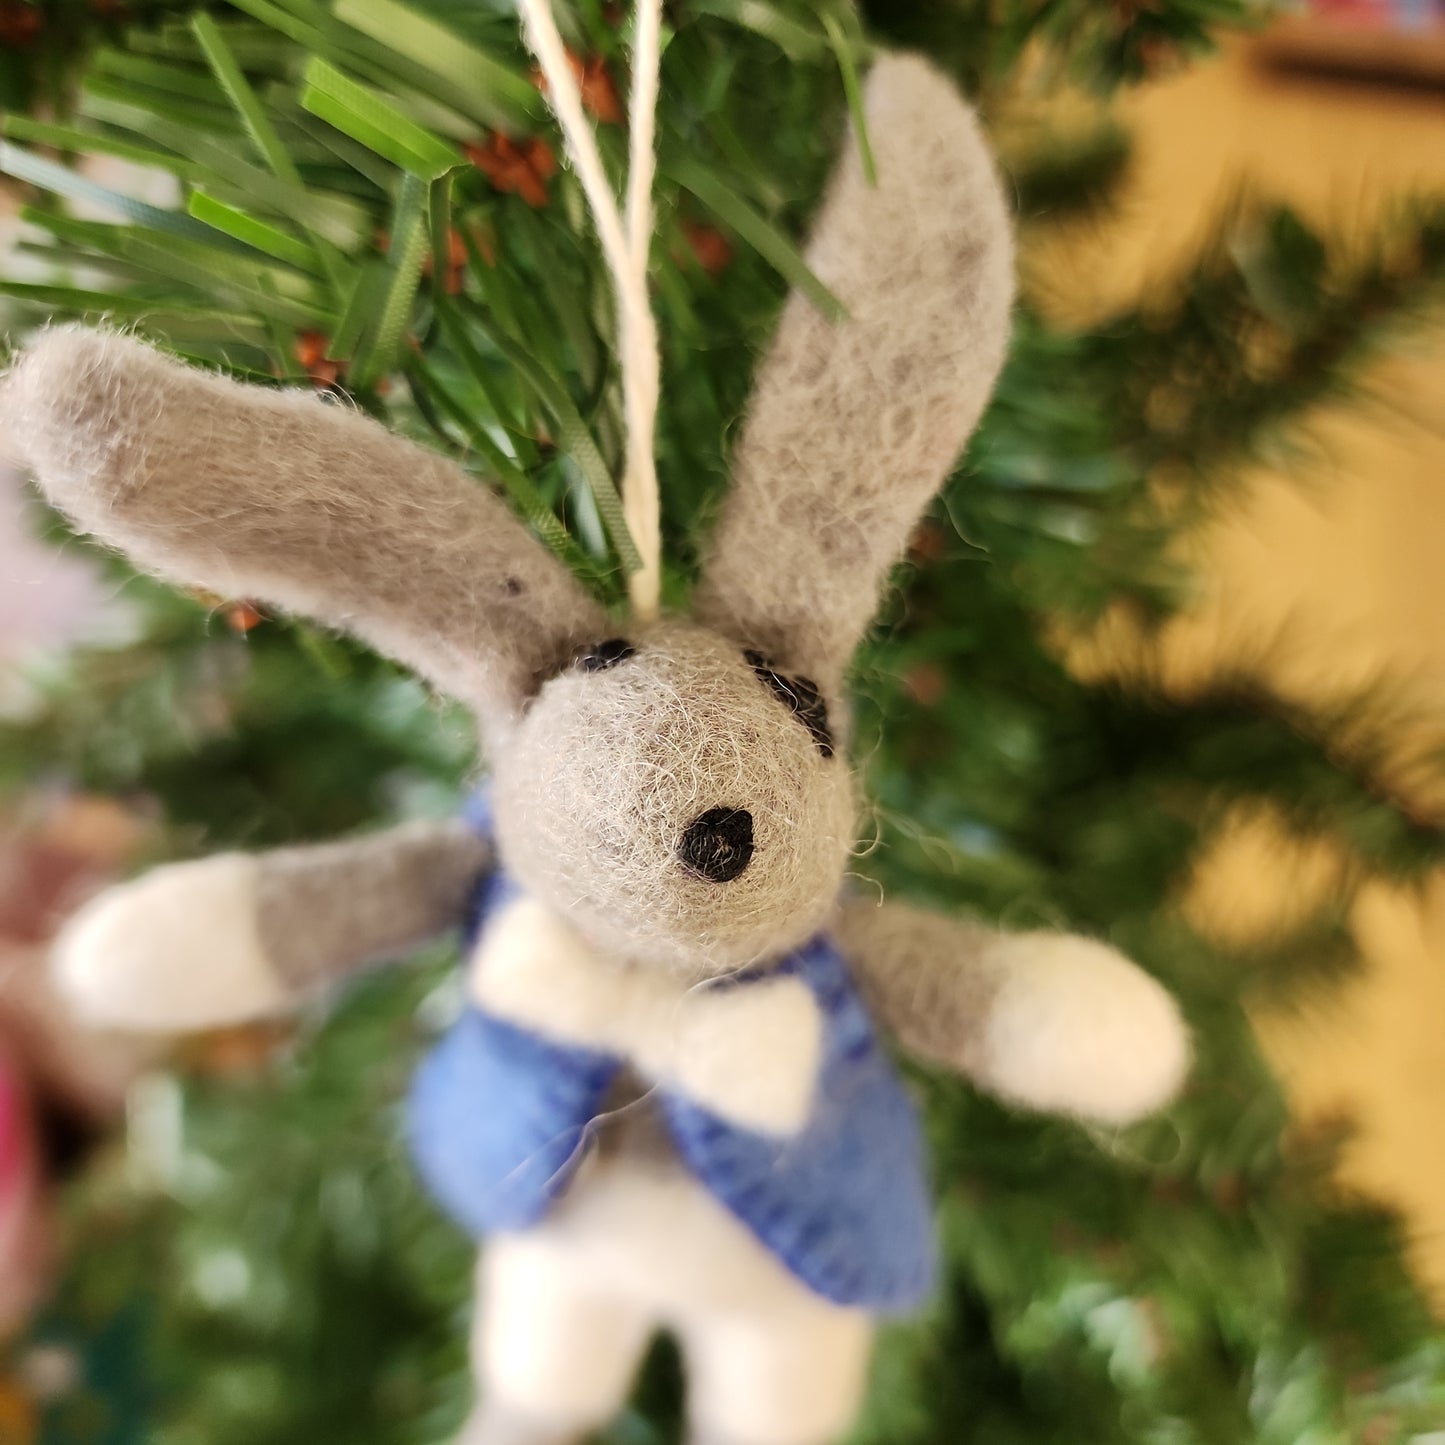 Felt Rabbit/Fox Ornament